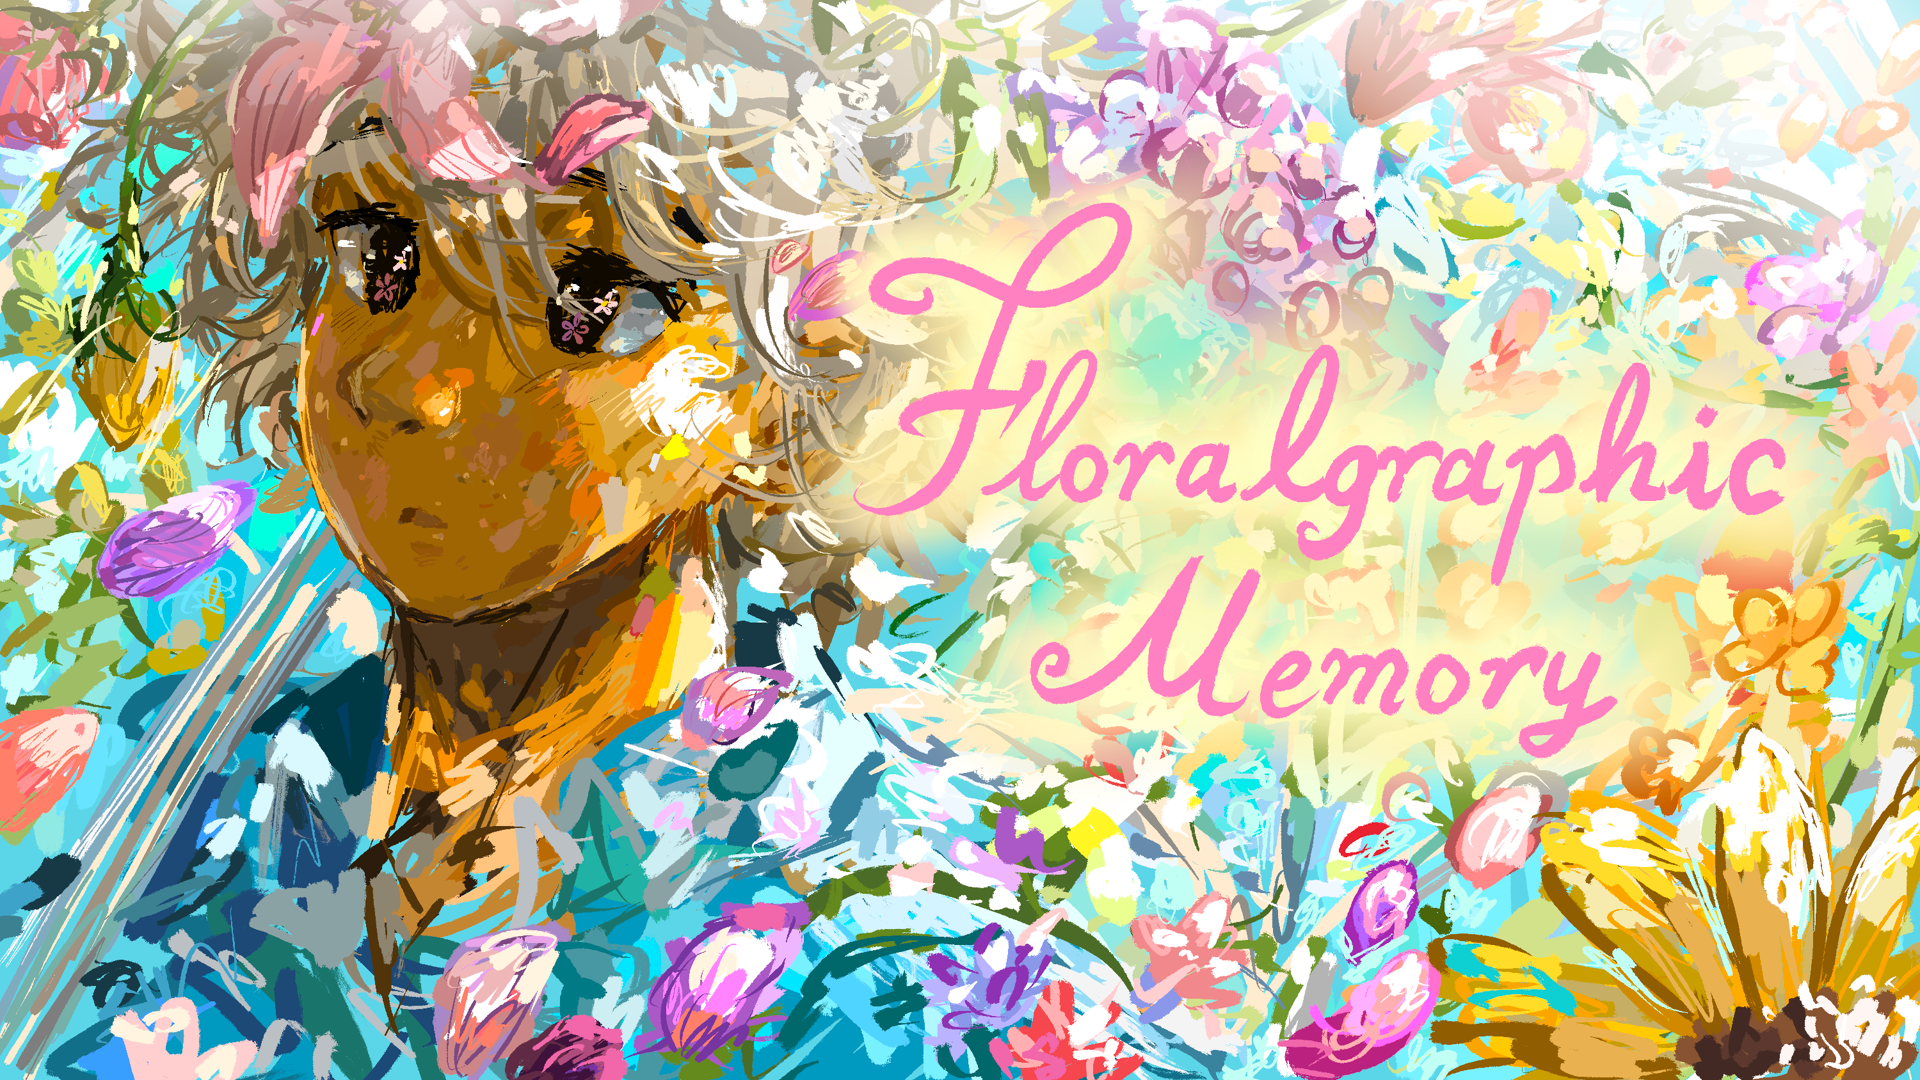 Floralgraphic Memory